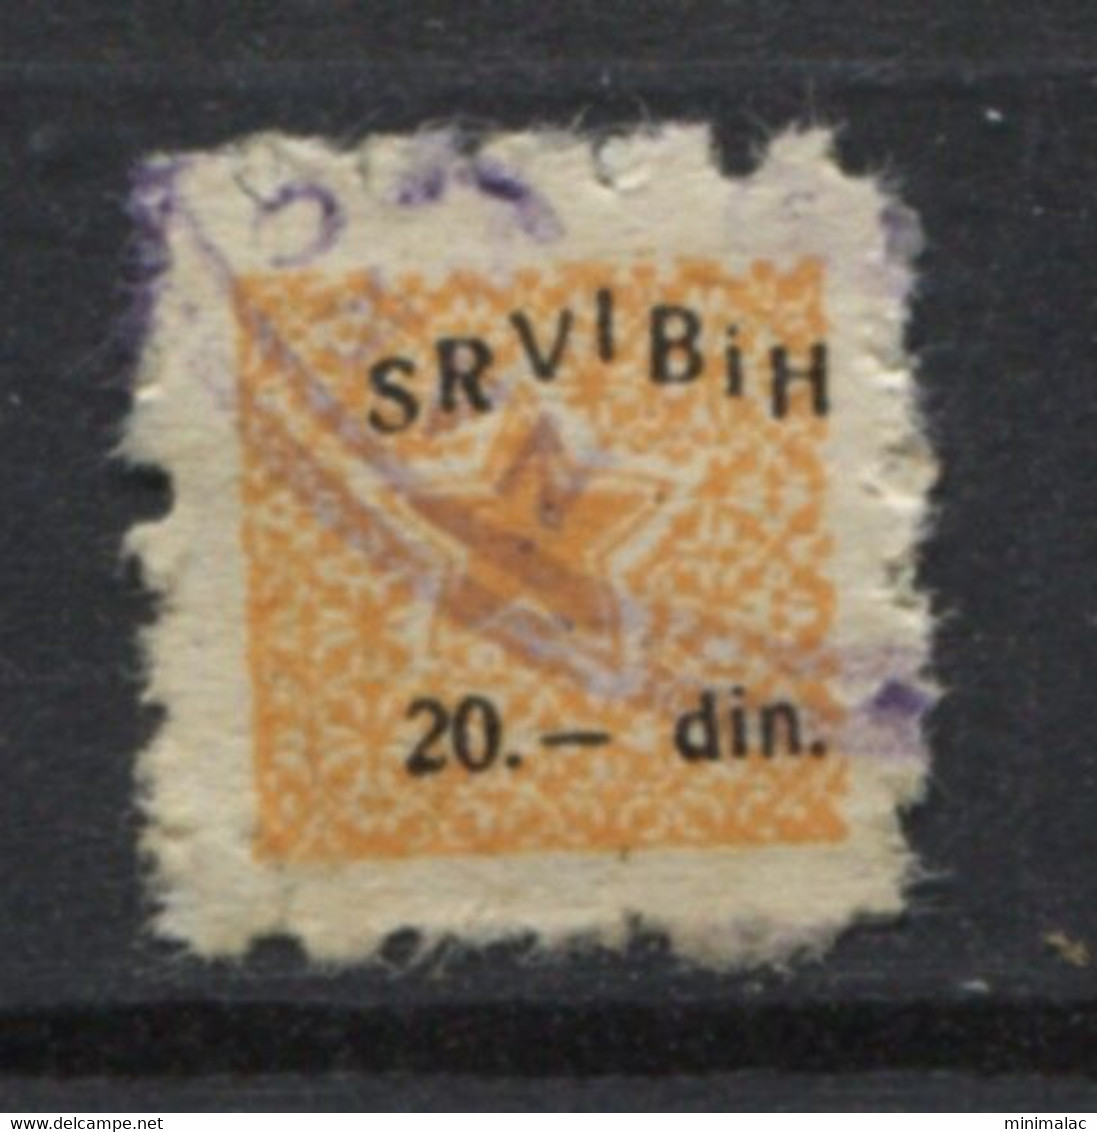 Yugoslavia 1958, Stamp For Membership, SRVIBiH, Labor Union, Administrative Stamp - Revenue, Tax Stamp, 20d    Used - Dienstmarken